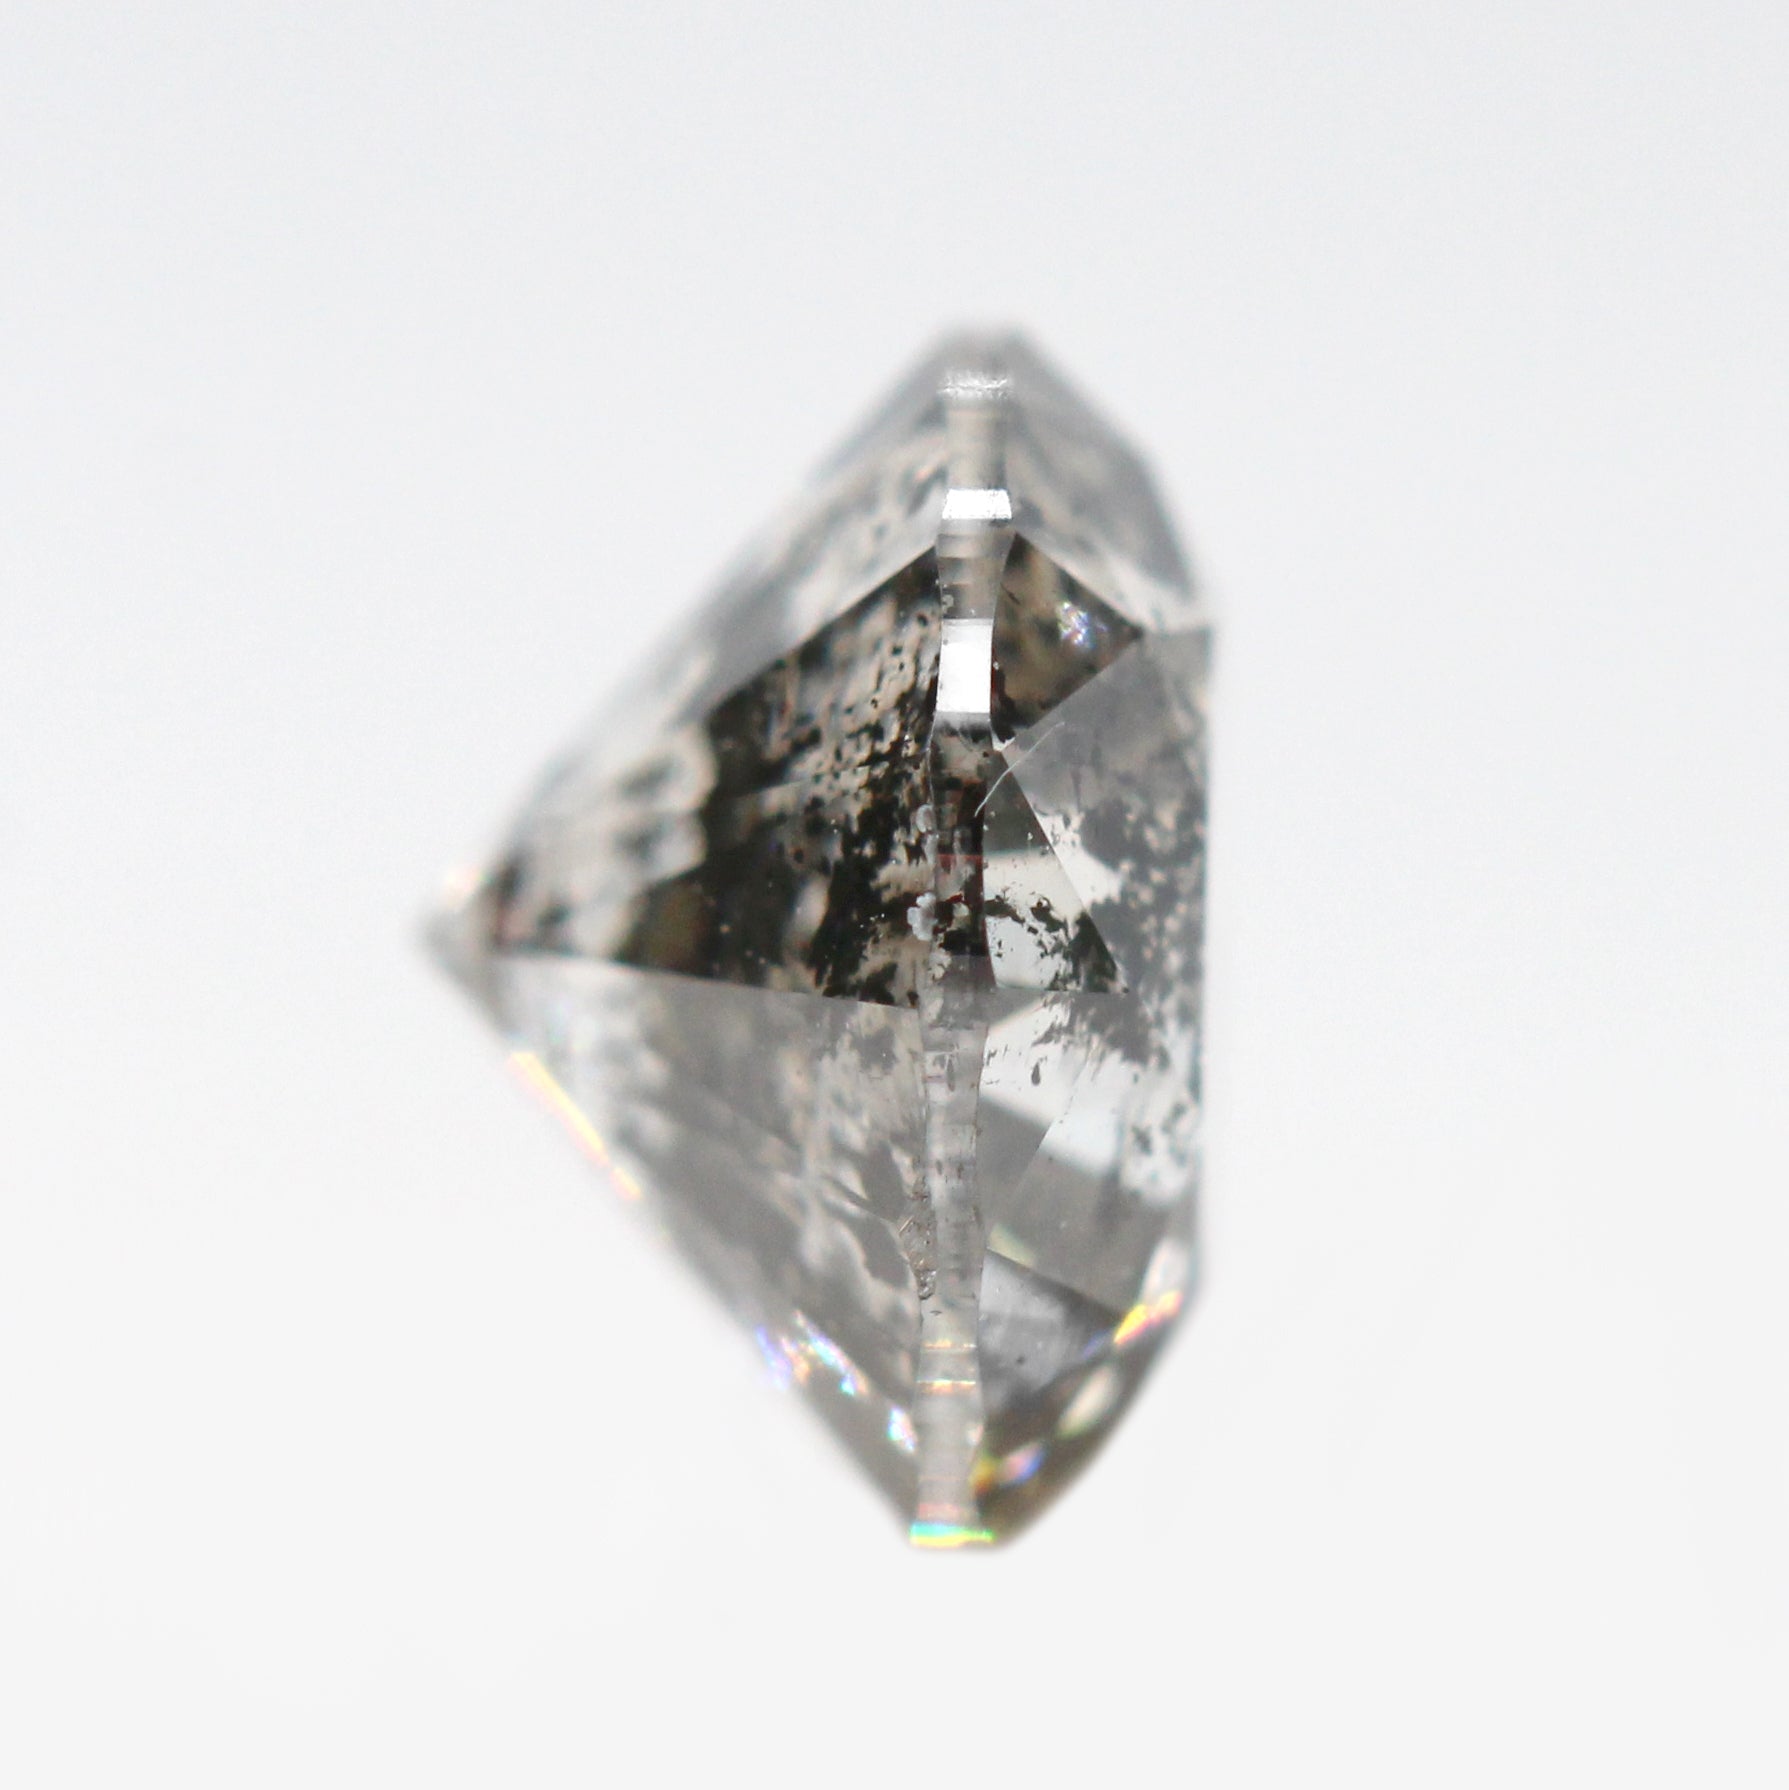 1.04 Carat Round Dark Gray Celestial Diamond for Custom Work DSR104 - Inventory Code - Midwinter Co. Alternative Bridal Rings and Modern Fine Jewelry